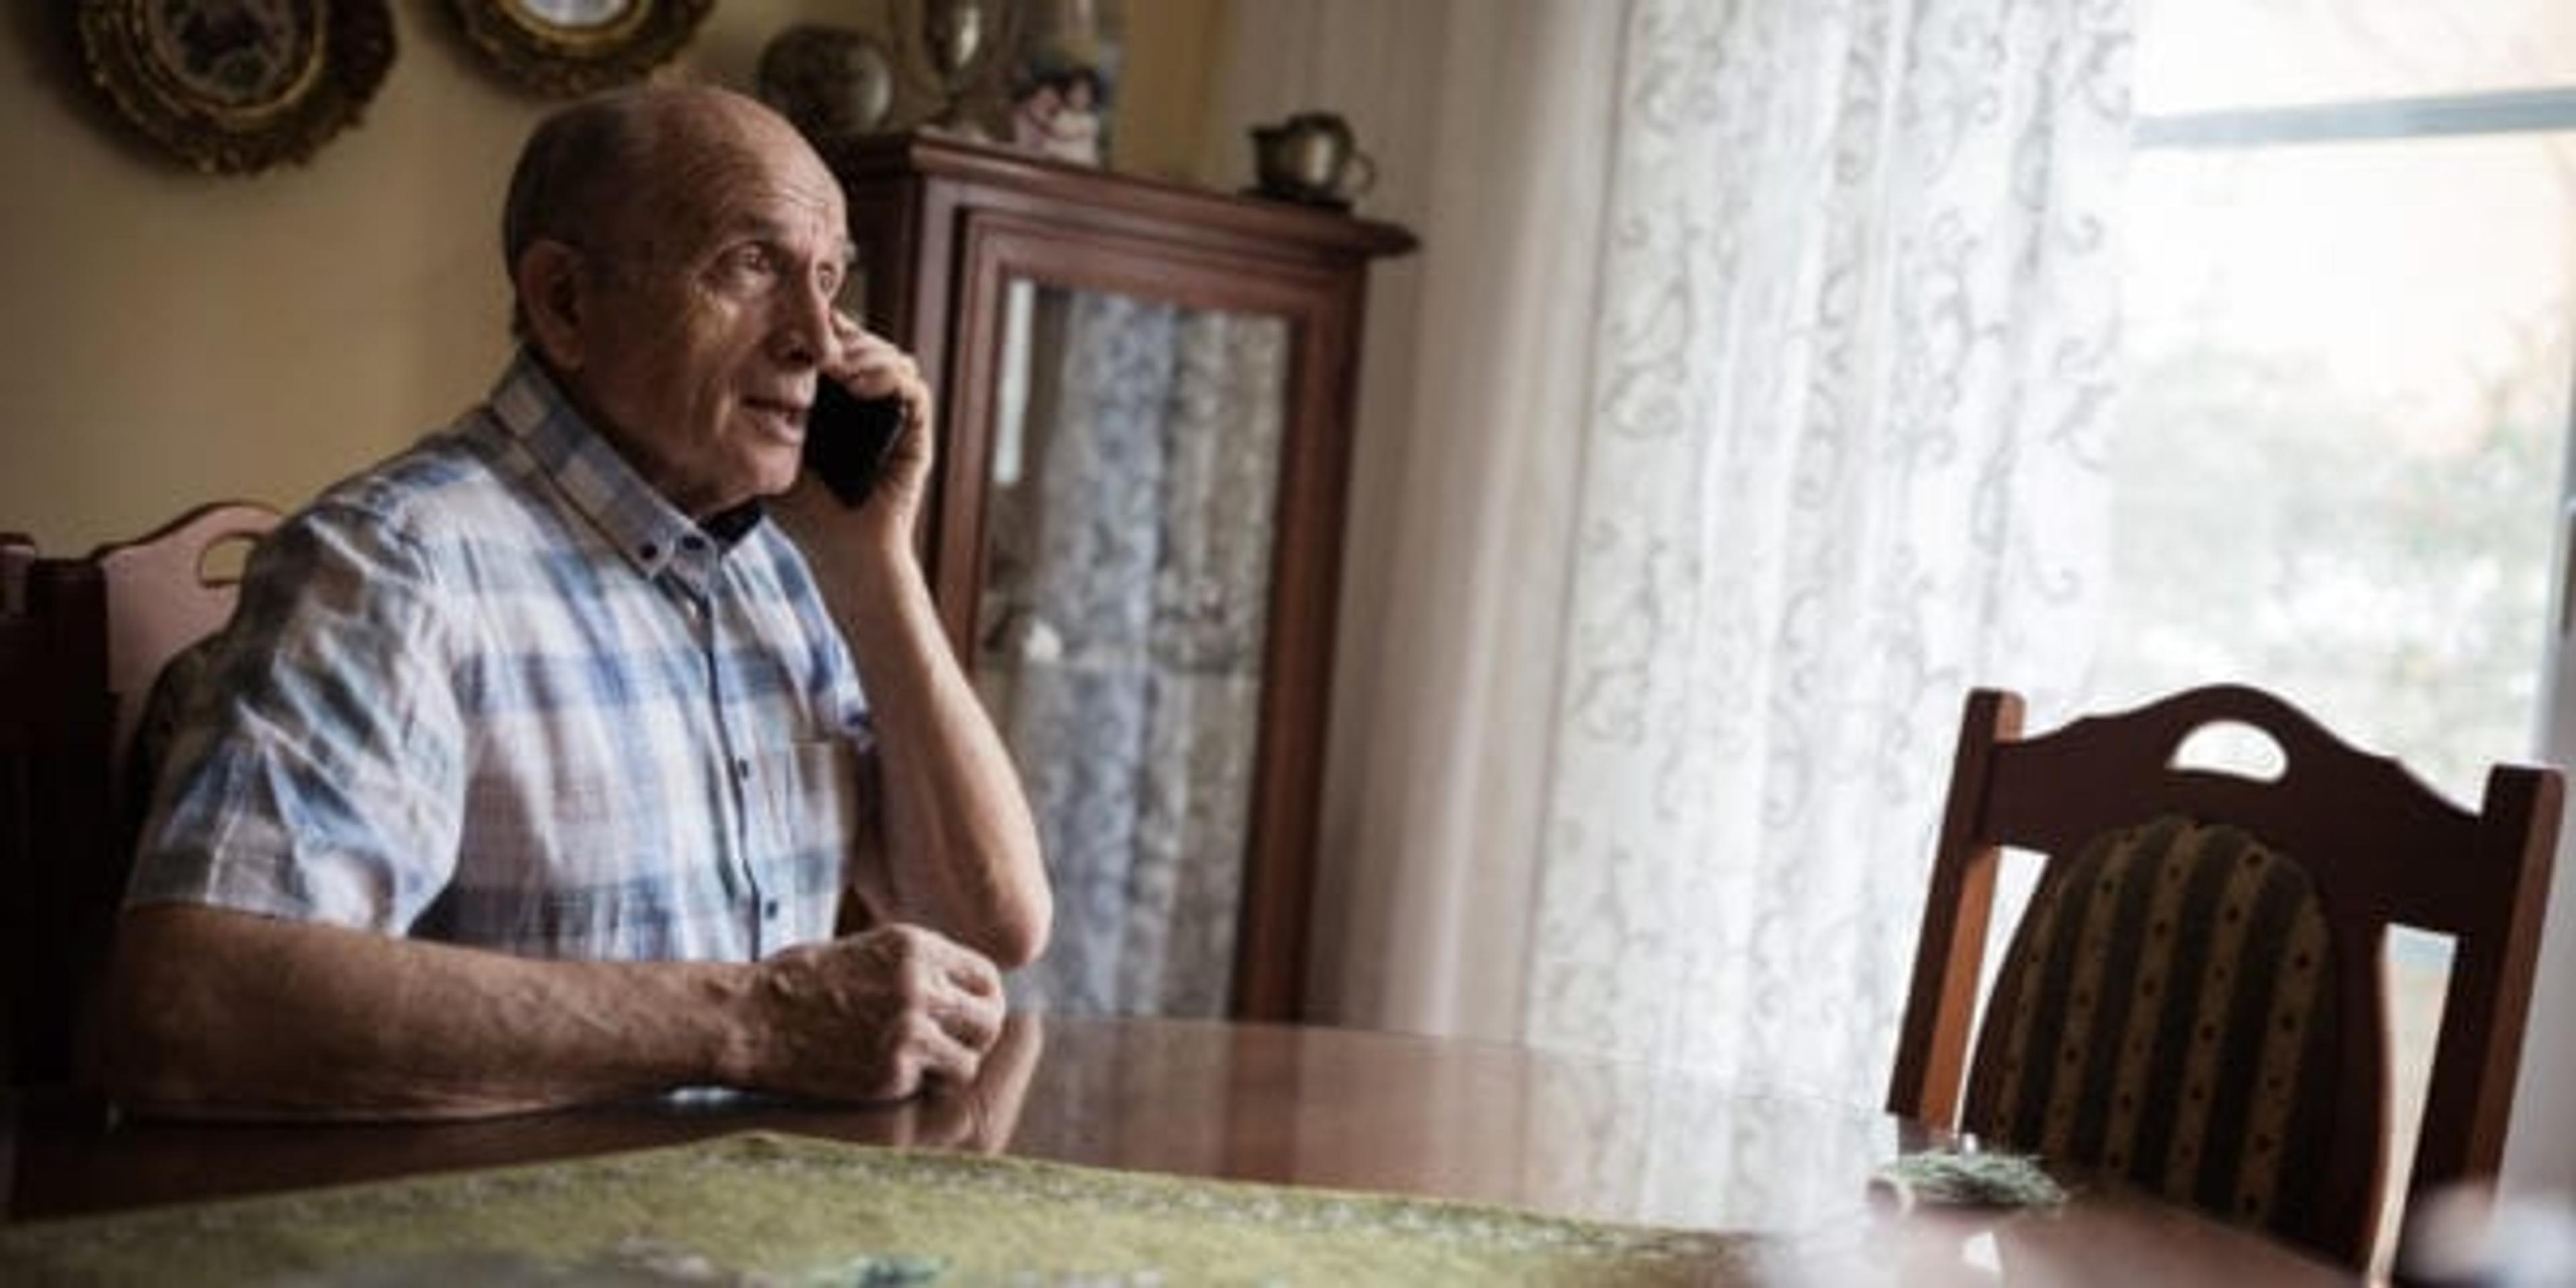 Elderly man talking on the phone